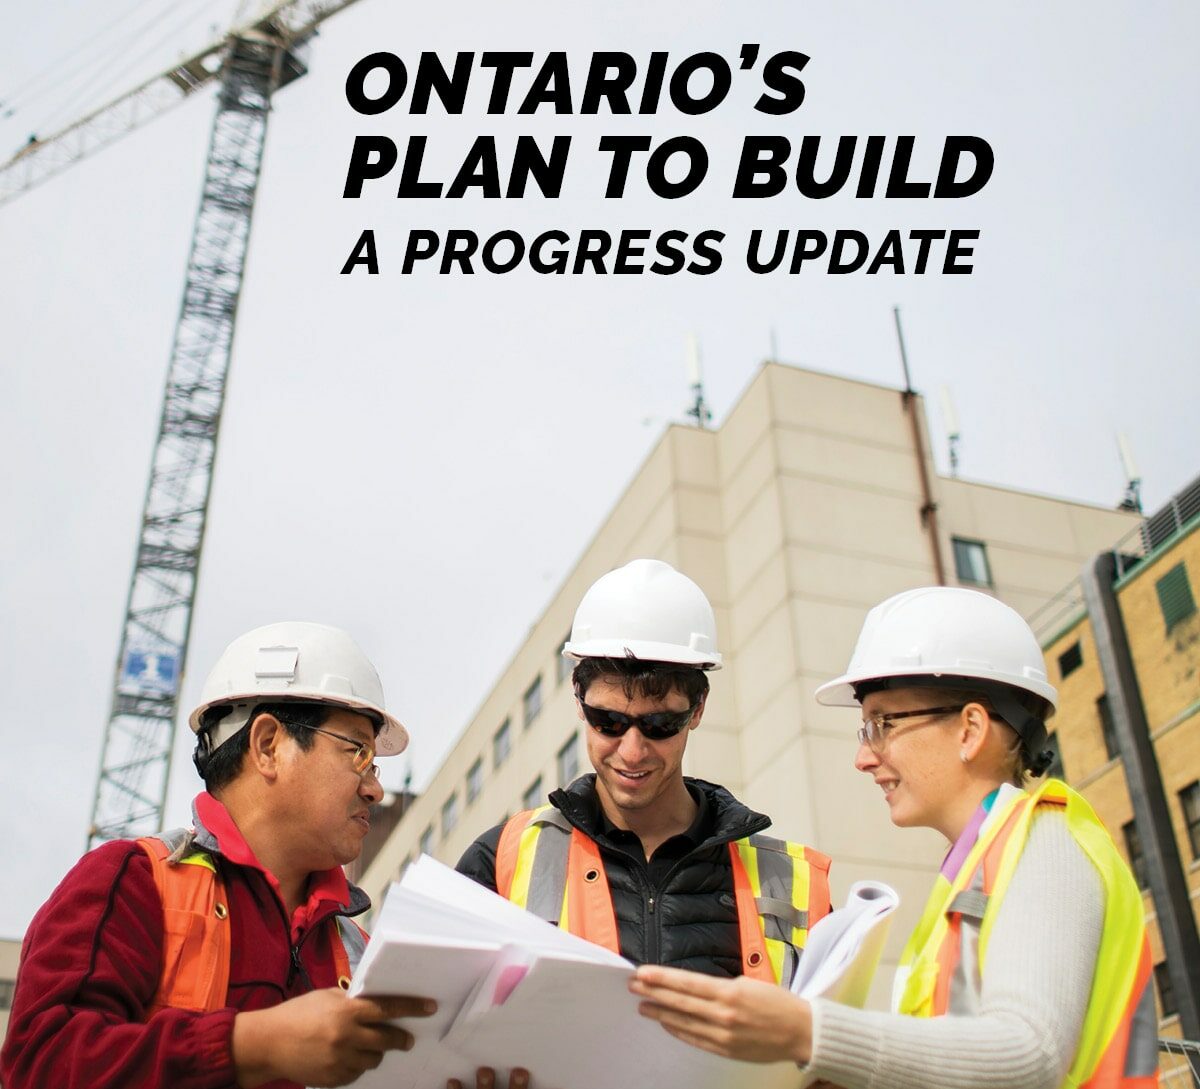 Ontario's Plan to Build - A Progress Update